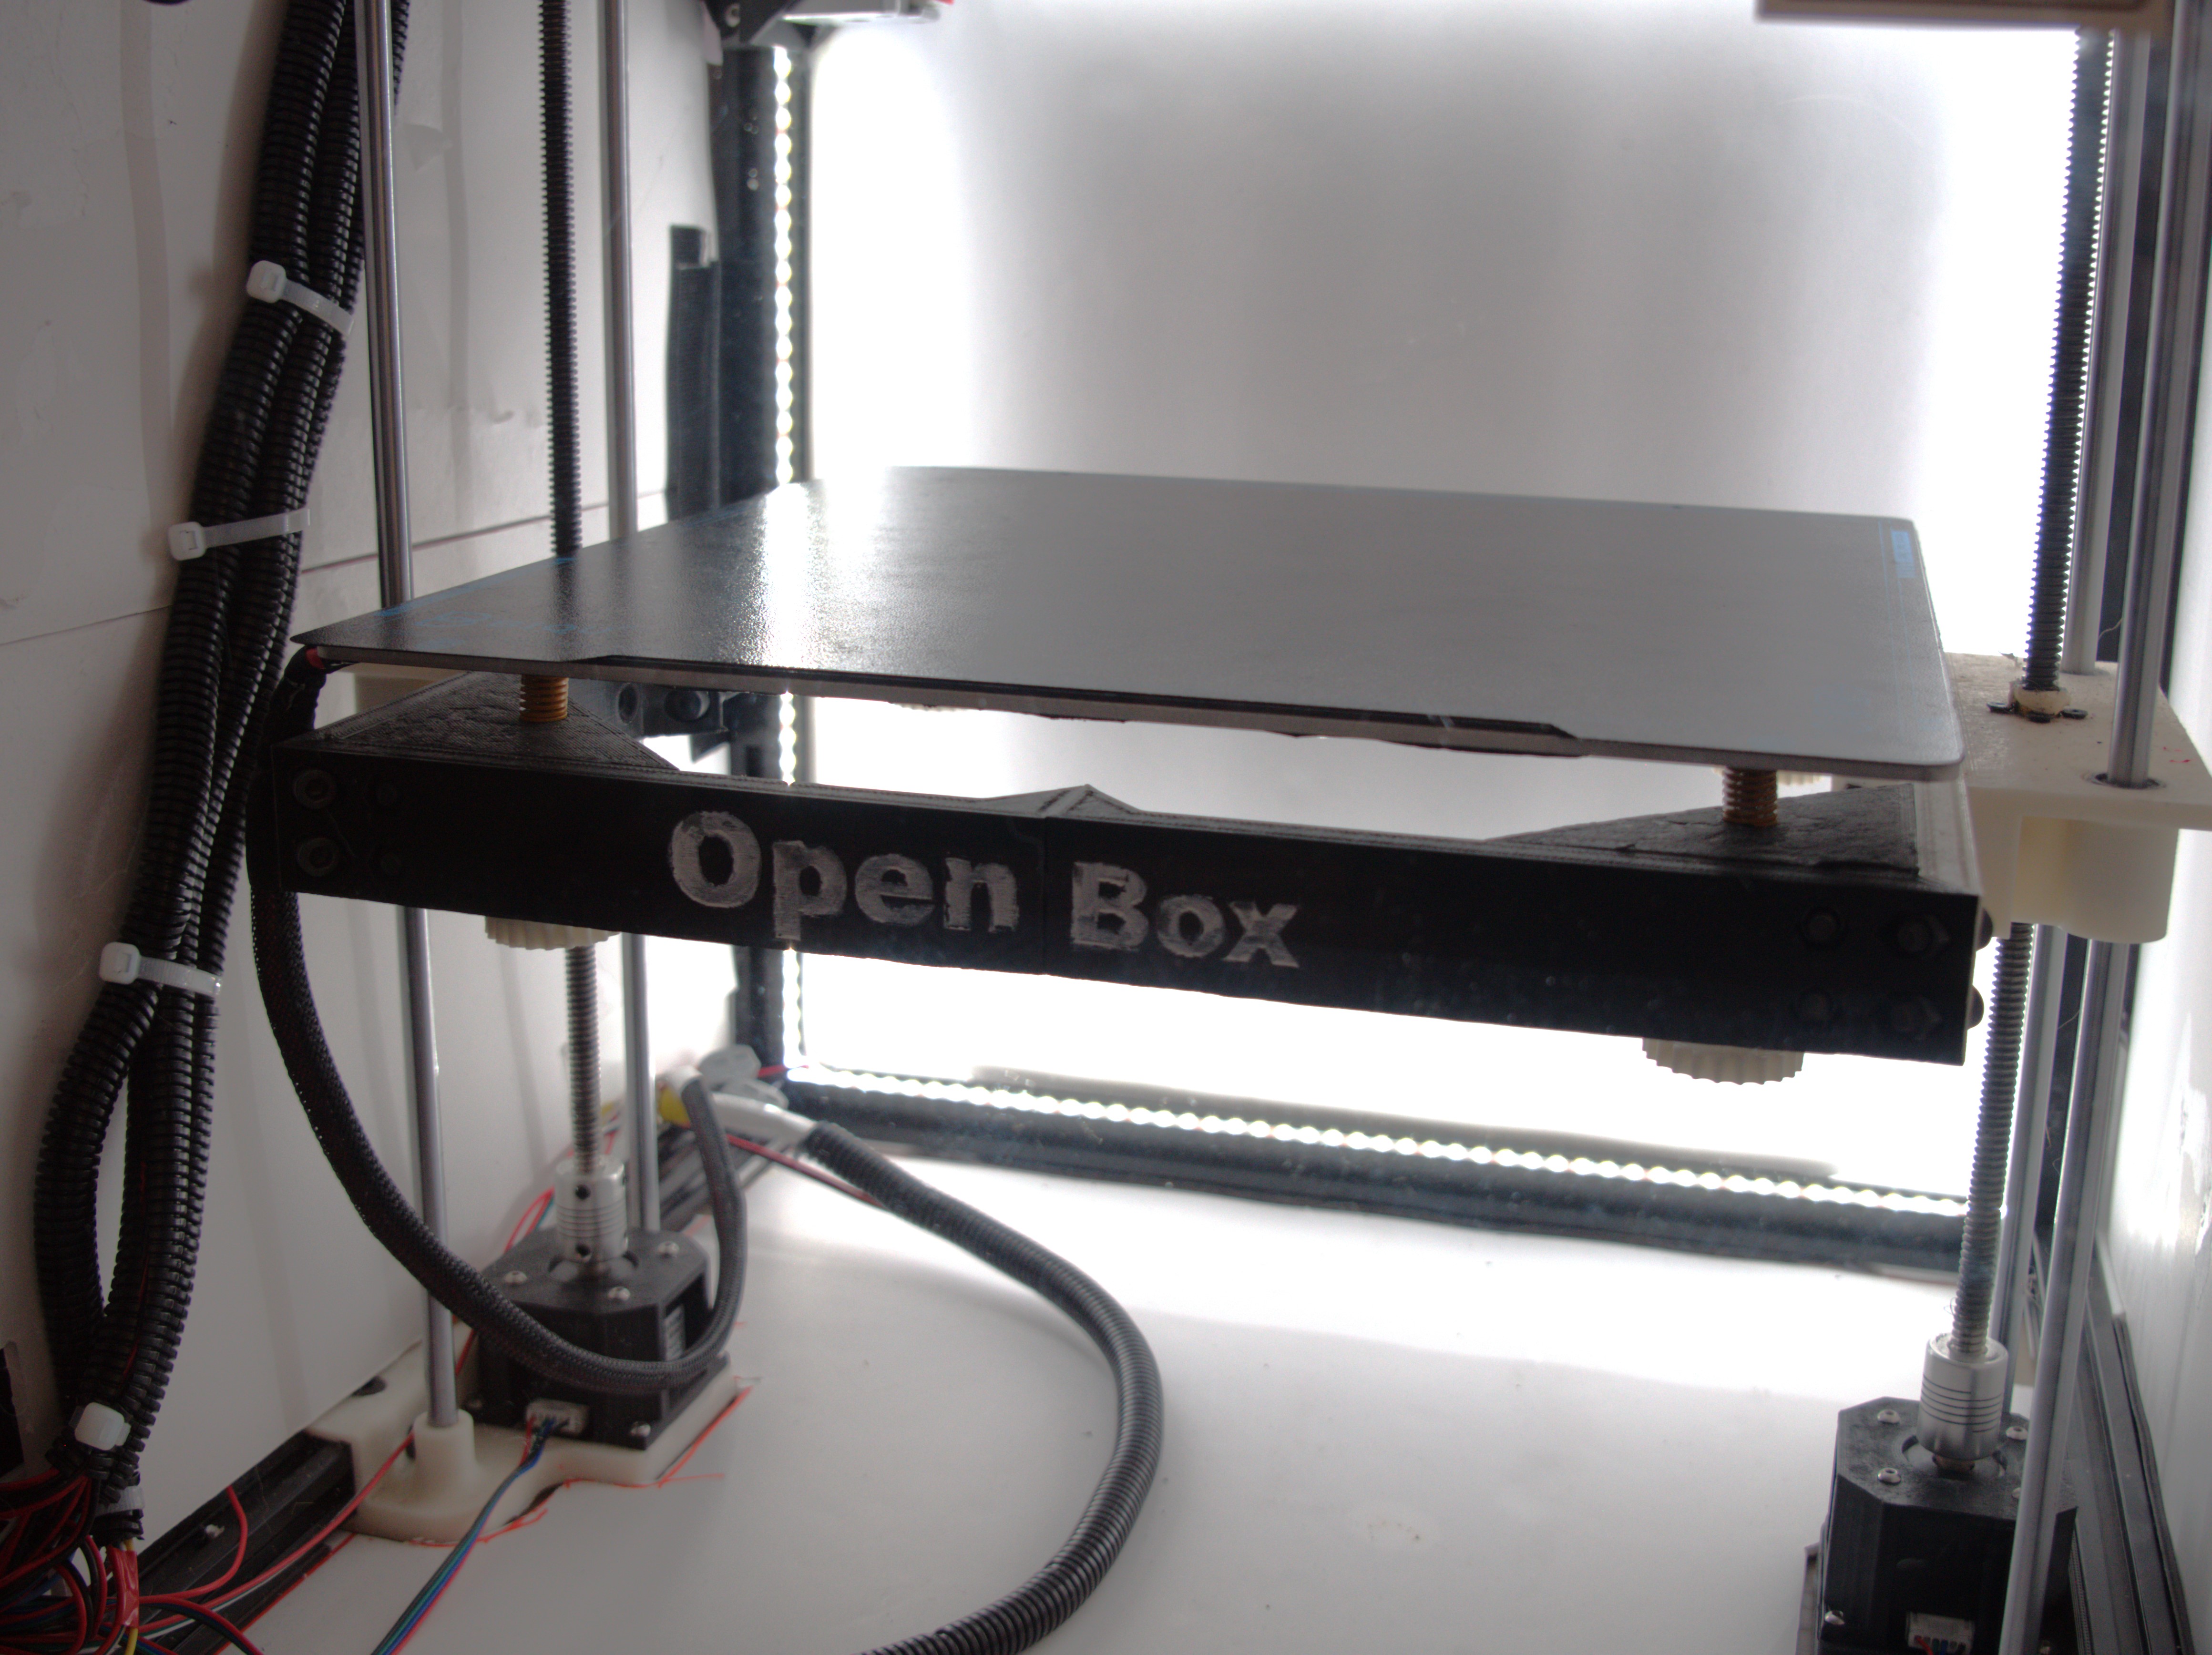 Open Box Printer Build Plate Close Up